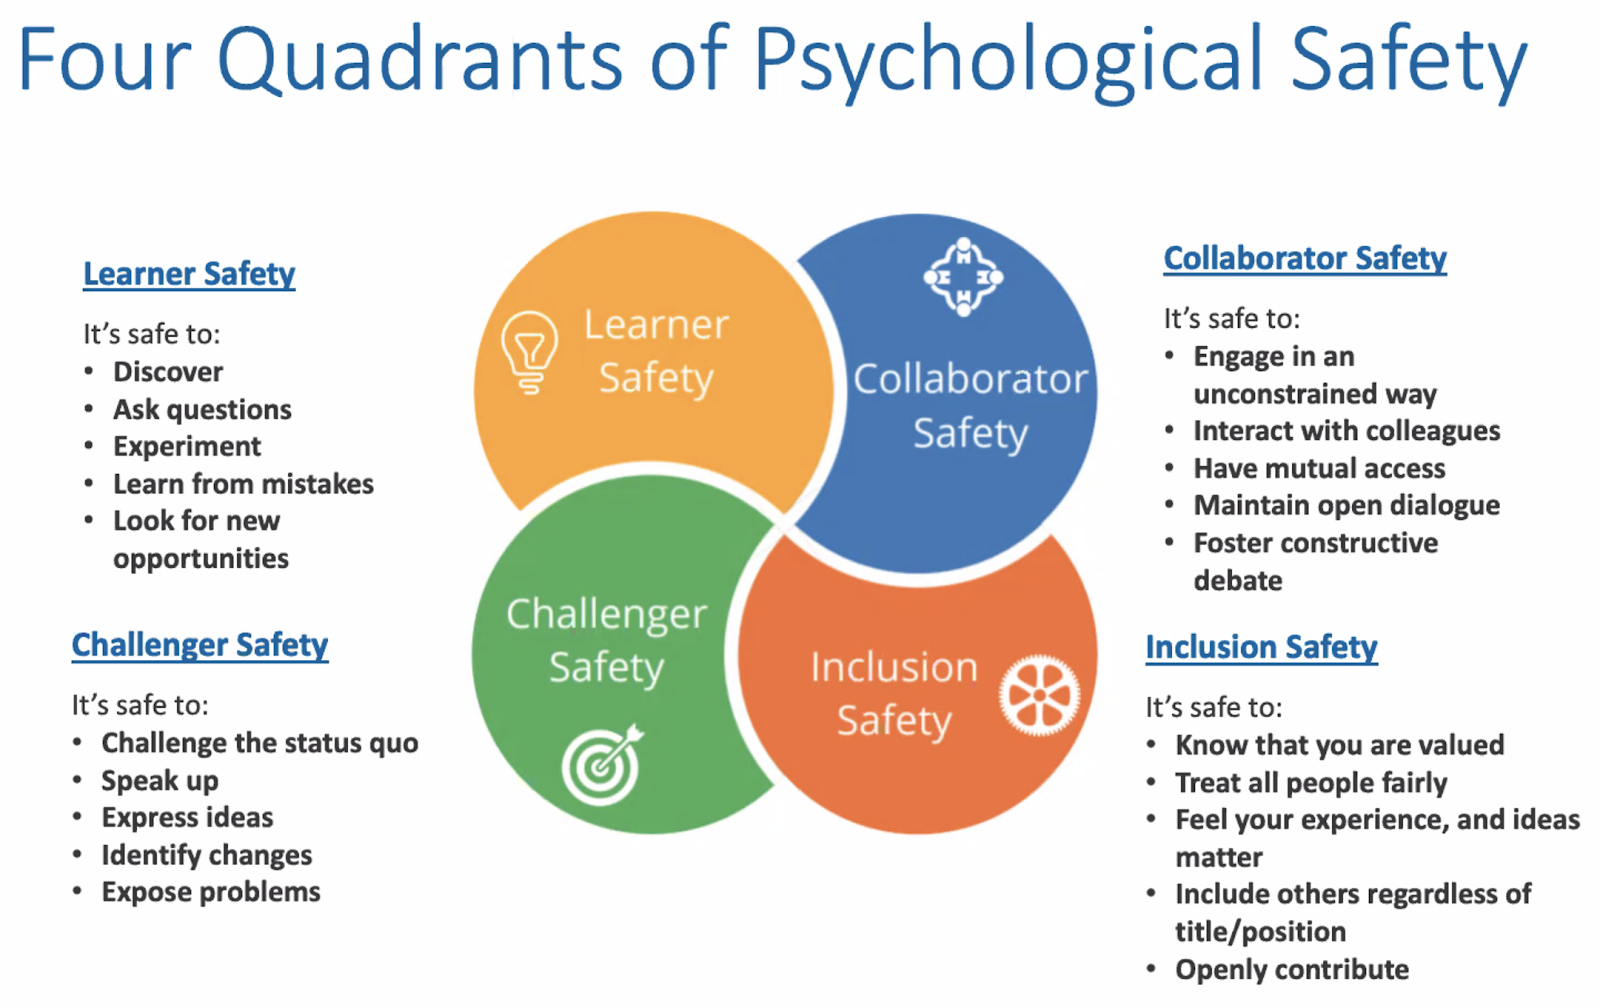 4 levels of psychological safety